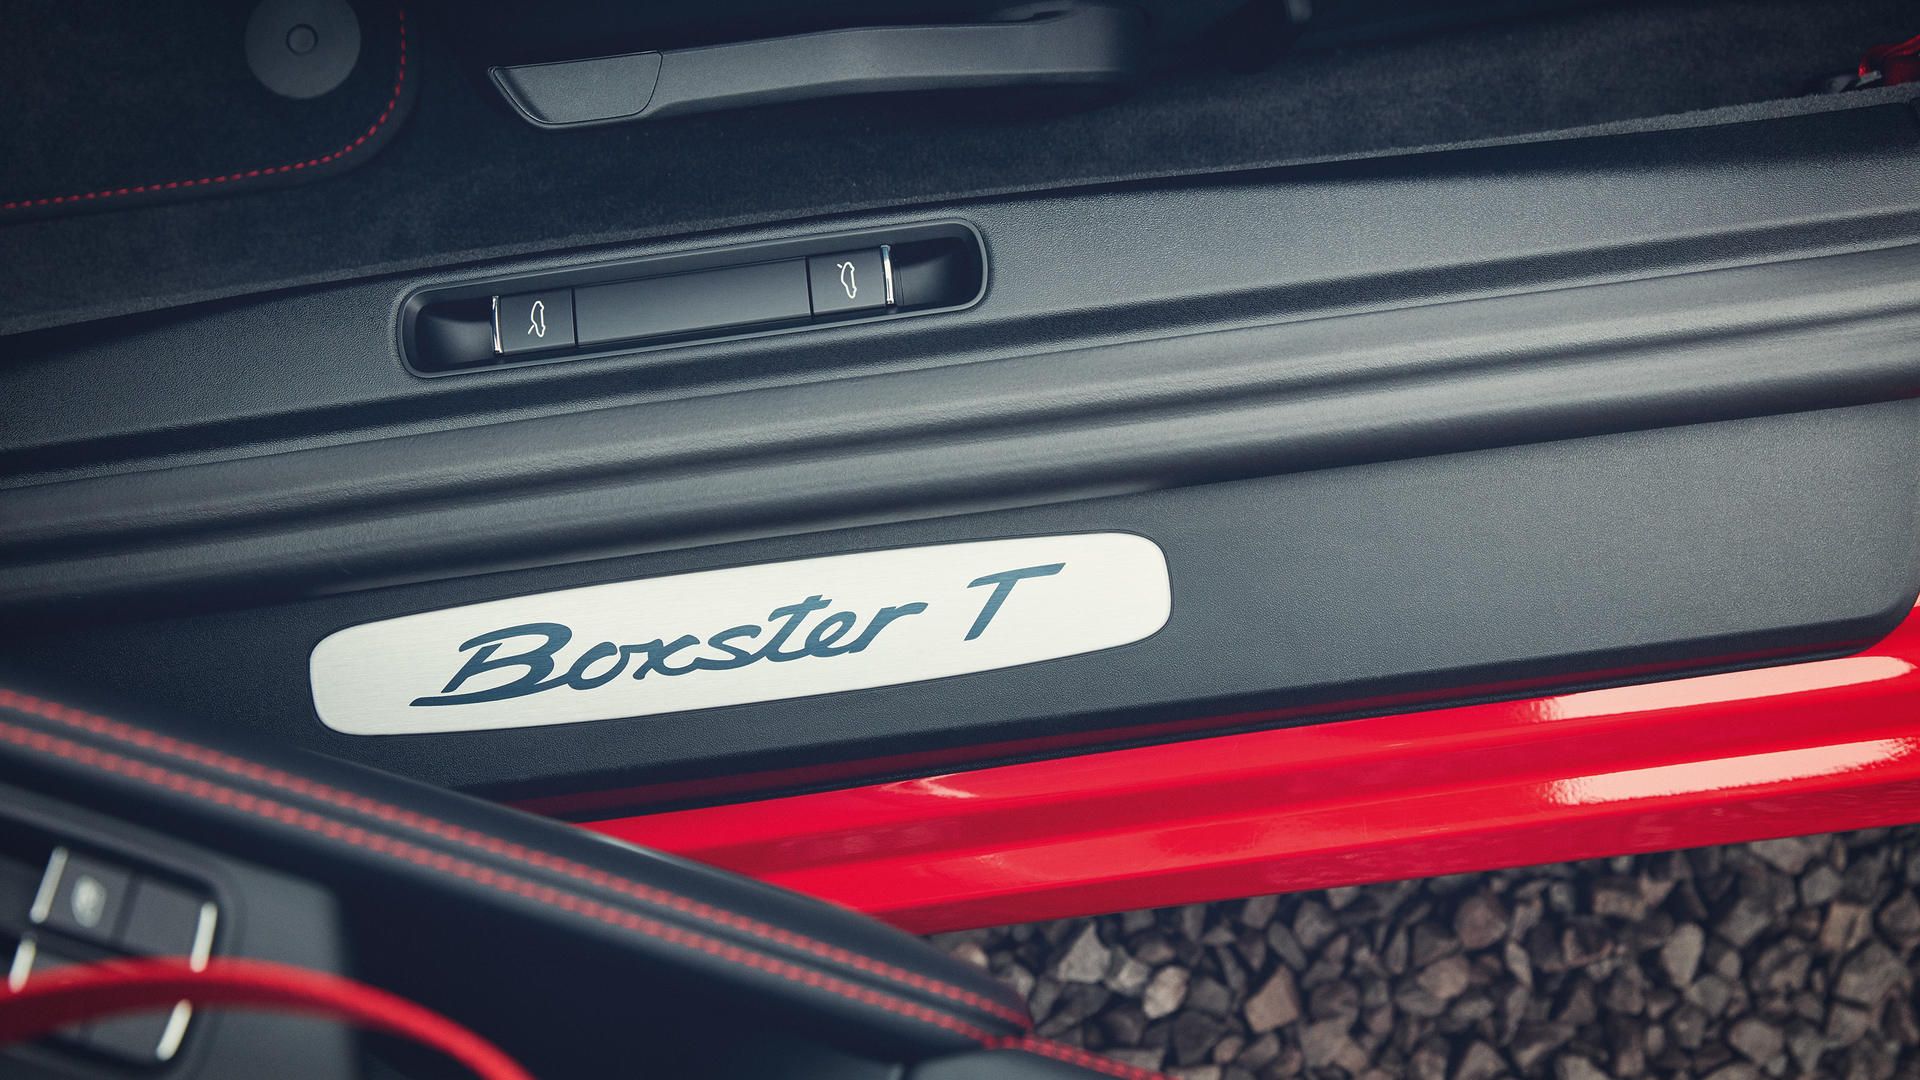 2019 Porsche 718 Boxster T